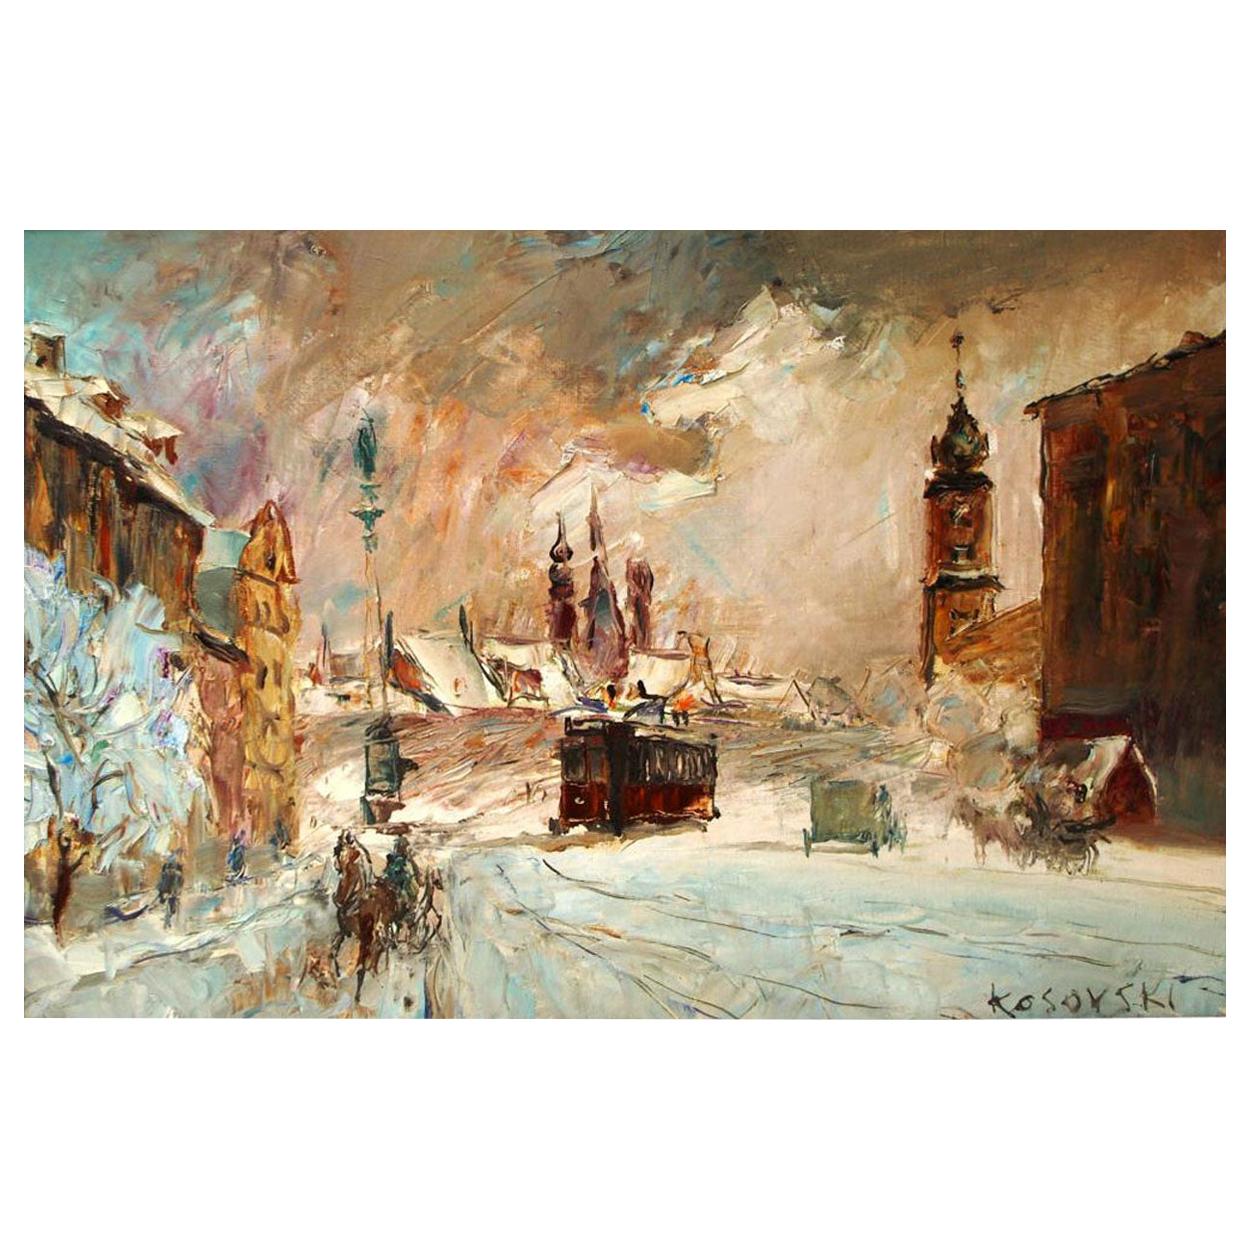 Wociech Kosowski 'Polish' Oil On Canvas City Scene in Winter